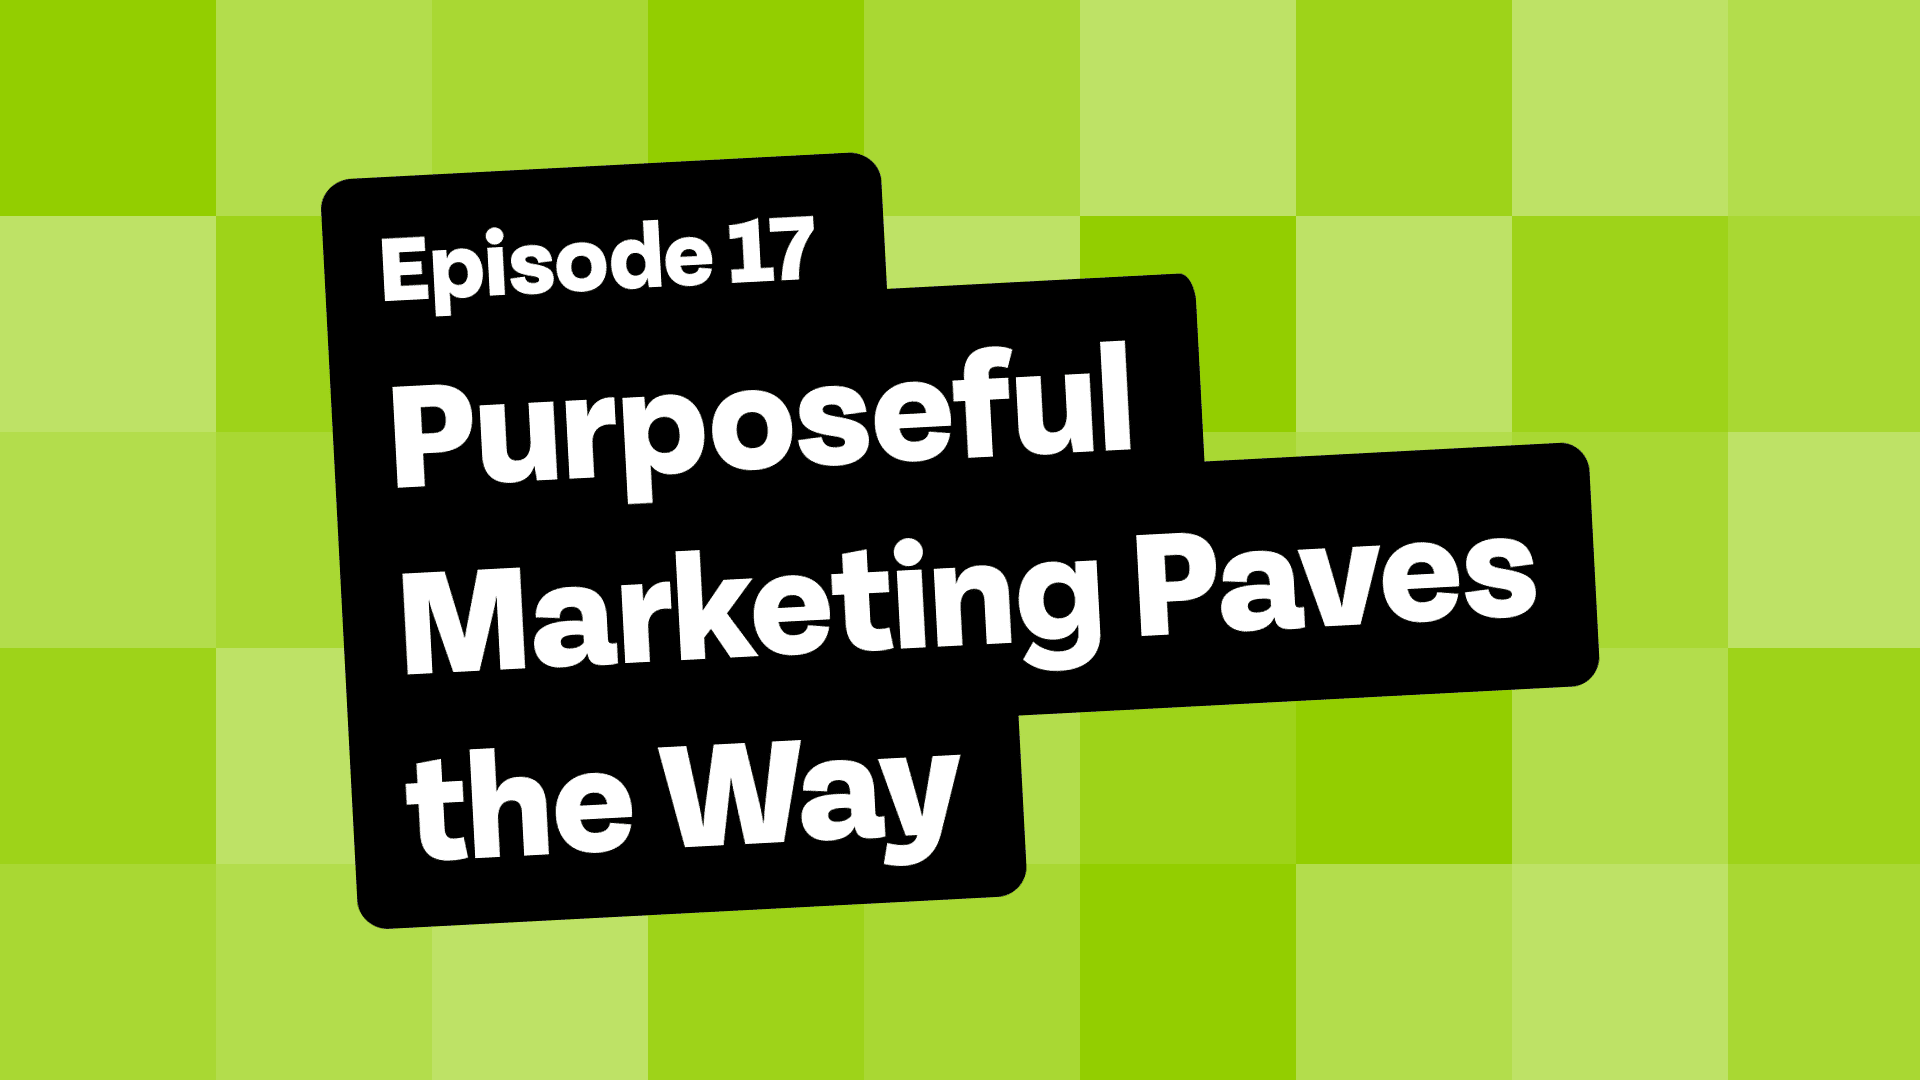 Purposeful Marketing Paves the Way